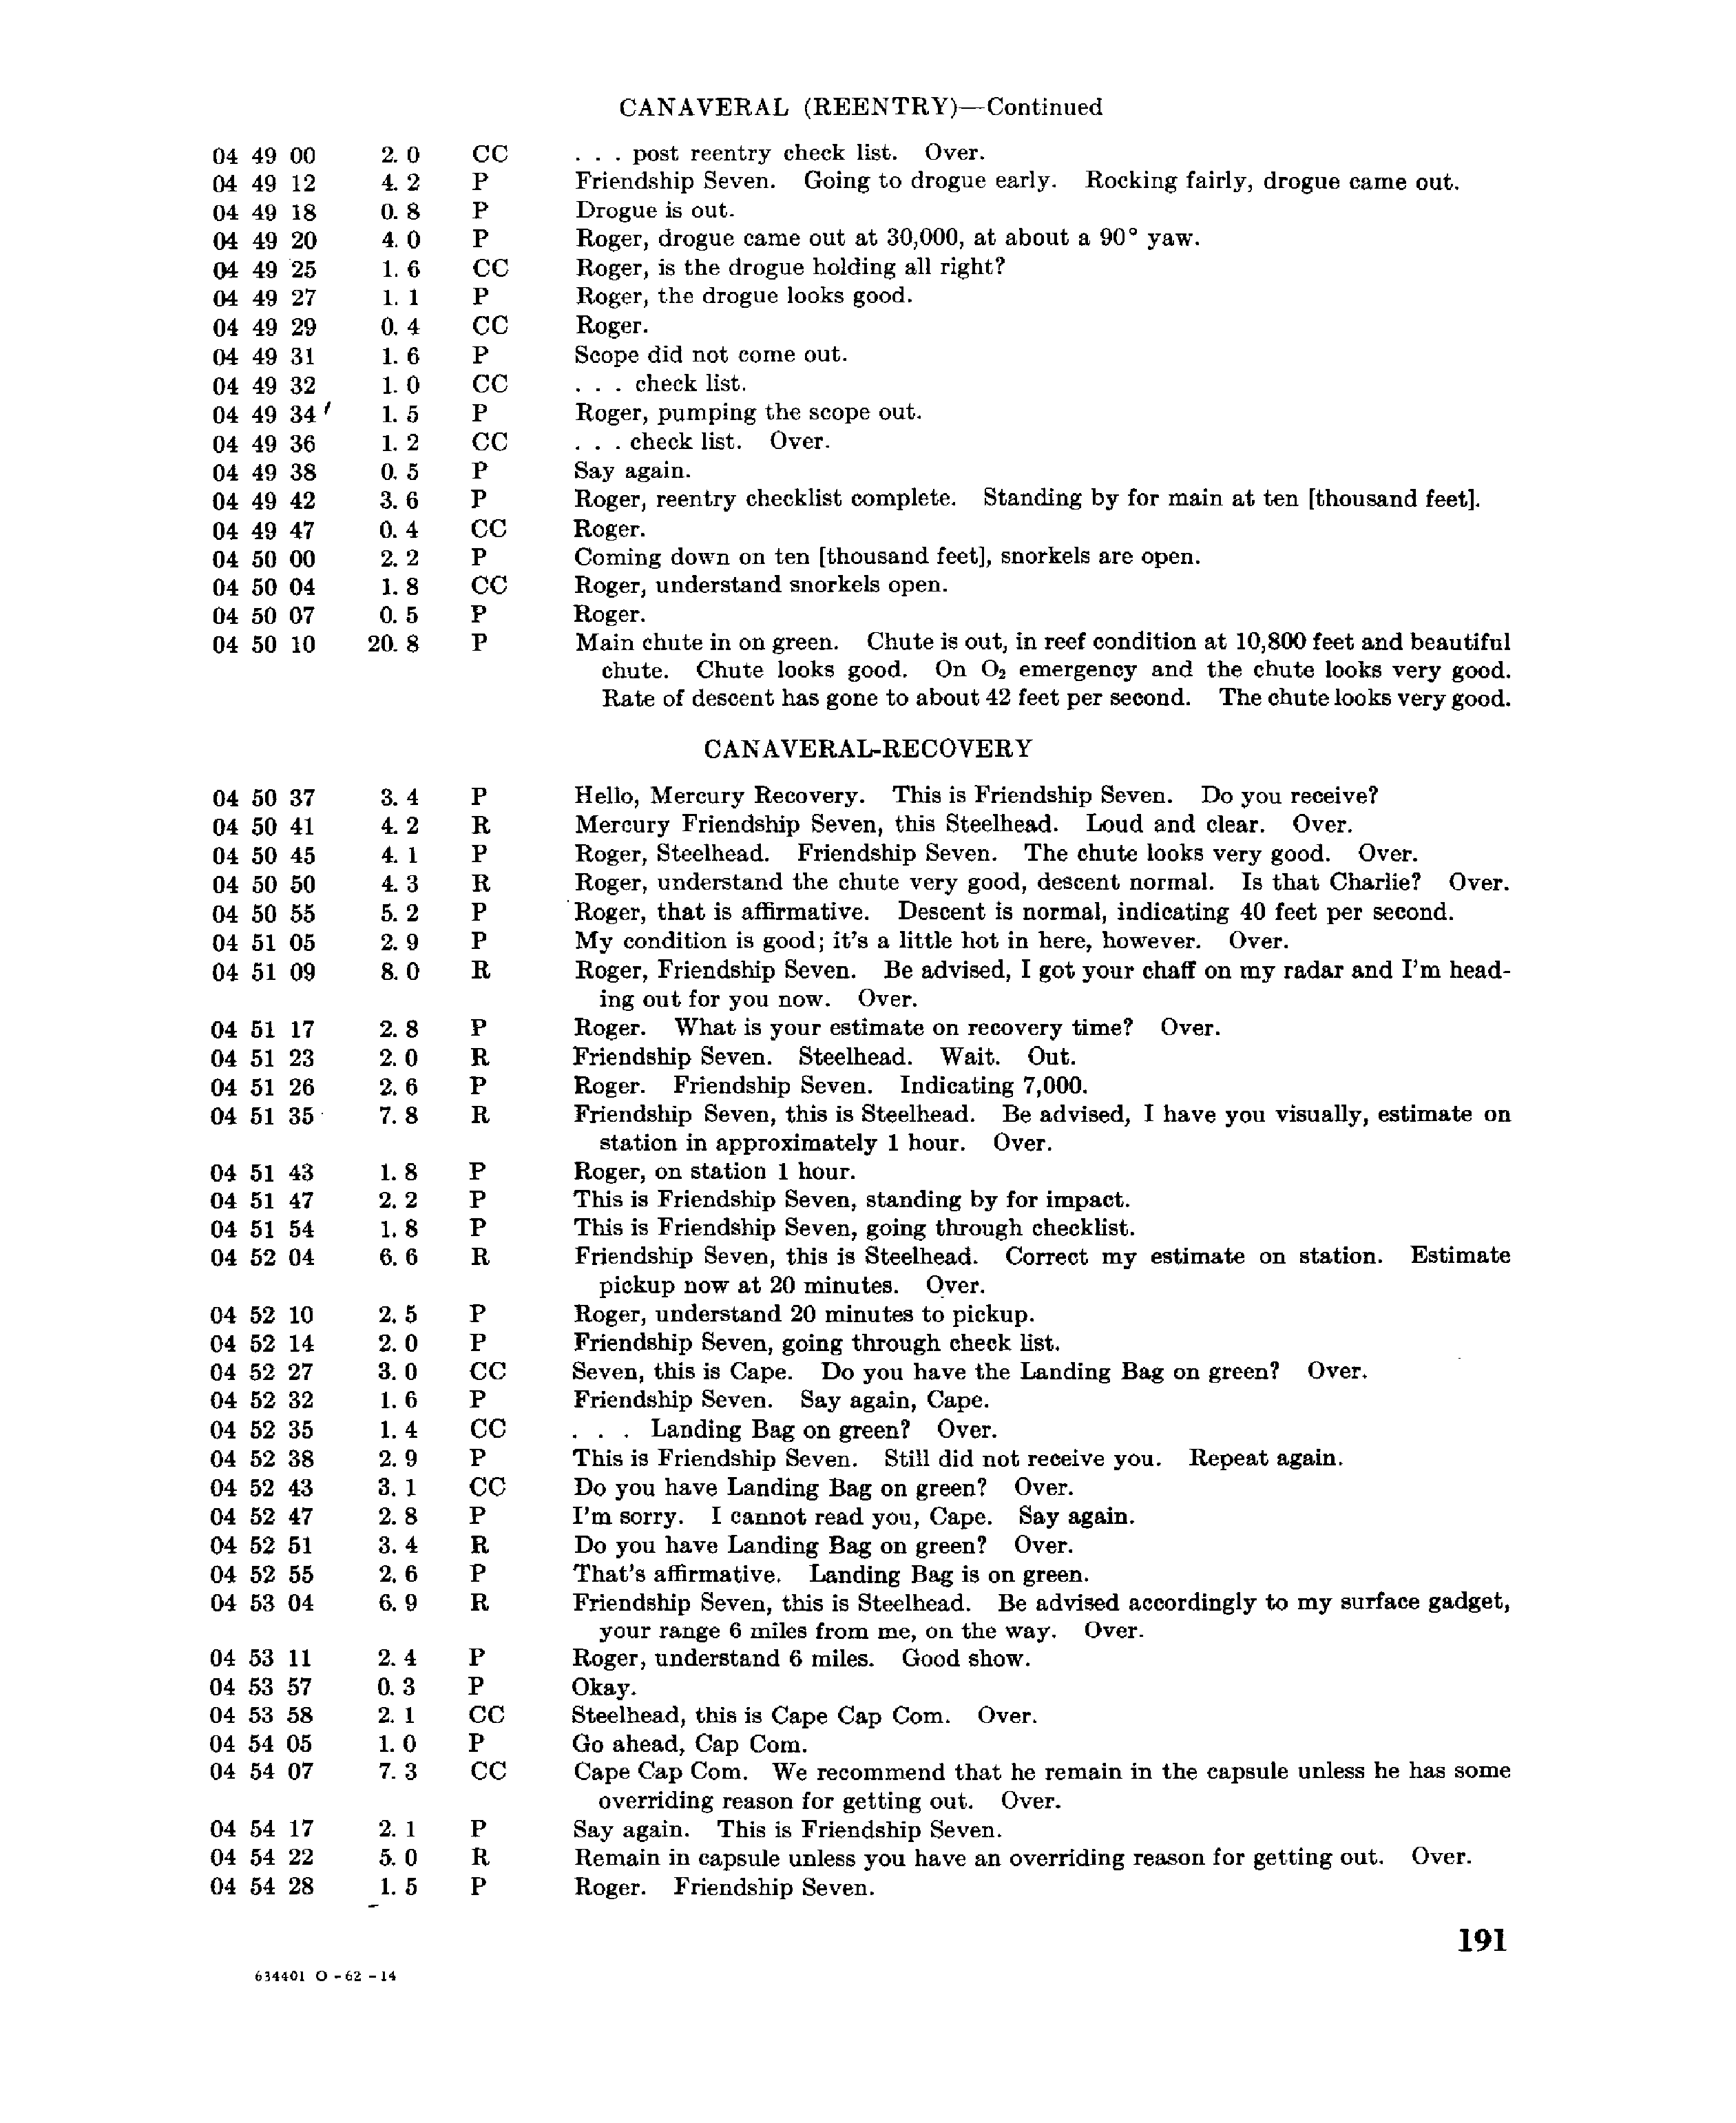 Page 190 of Mercury 6’s original transcript